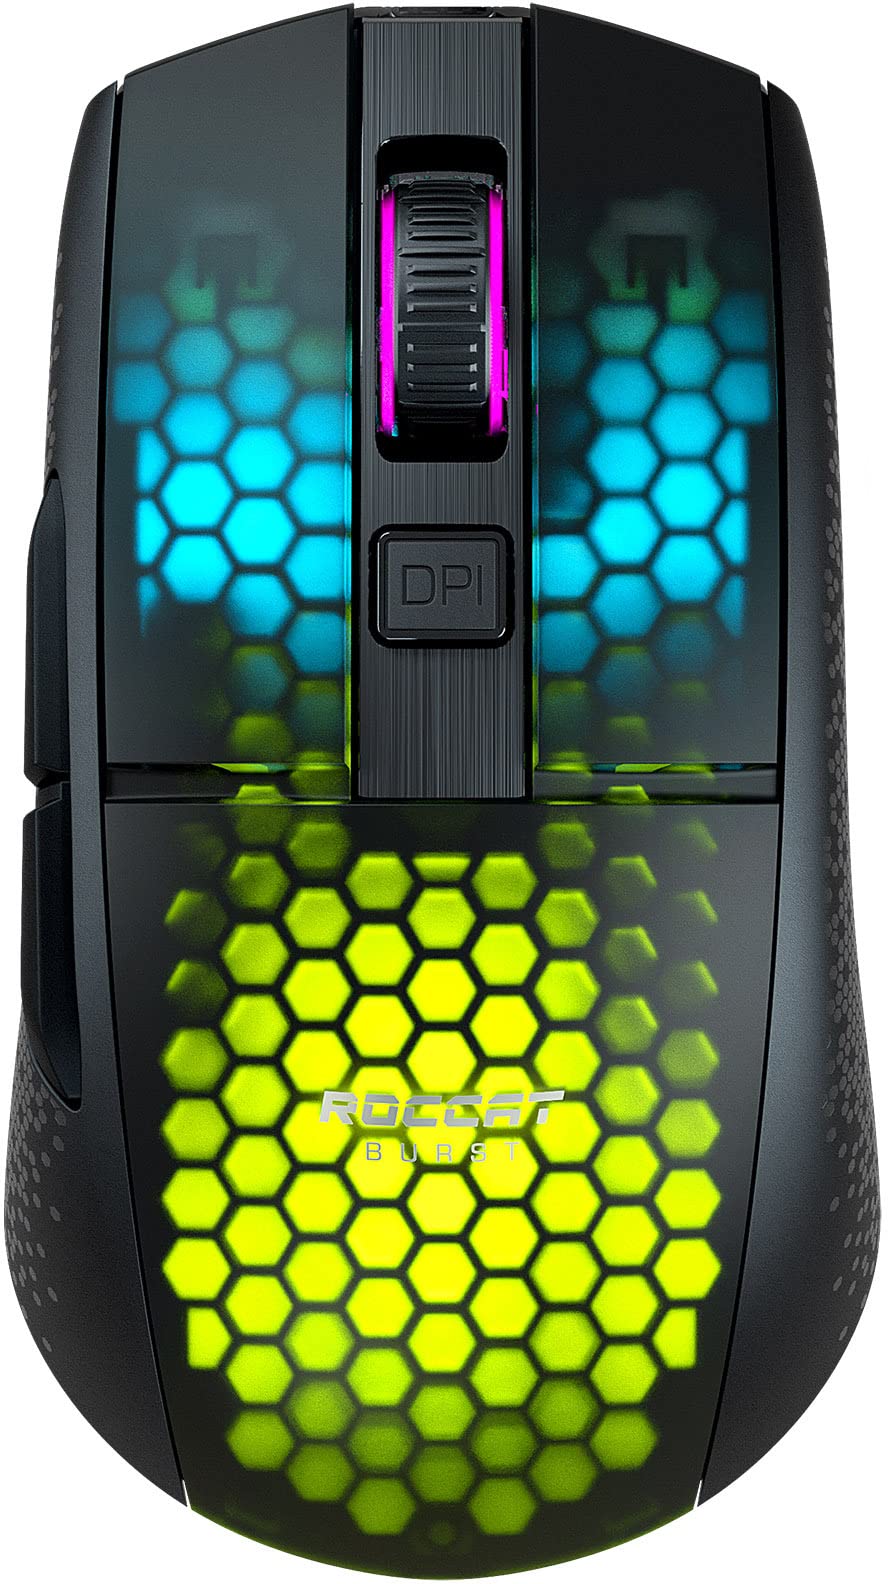 ROCCAT Burst Pro Air Lightweight Symmetrical, Wireless RGB Gaming Mouse with 19K DPI Optical Owl-Eye Sensor, Optical Switches, Titan Wheel, 81-Gram Weight – Black $46.93